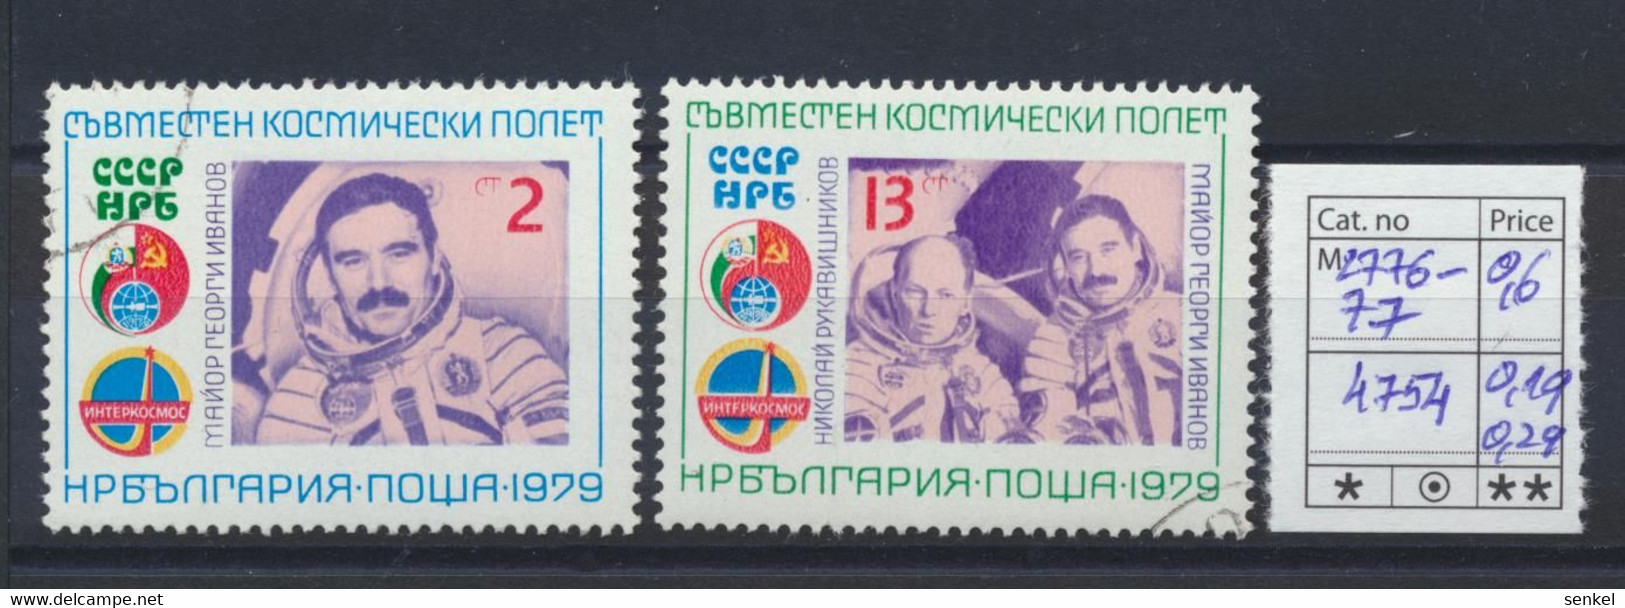 4743 - 4758 Bulgaria 1979 different stamps theatre olympics alpinism cosmos exhibition